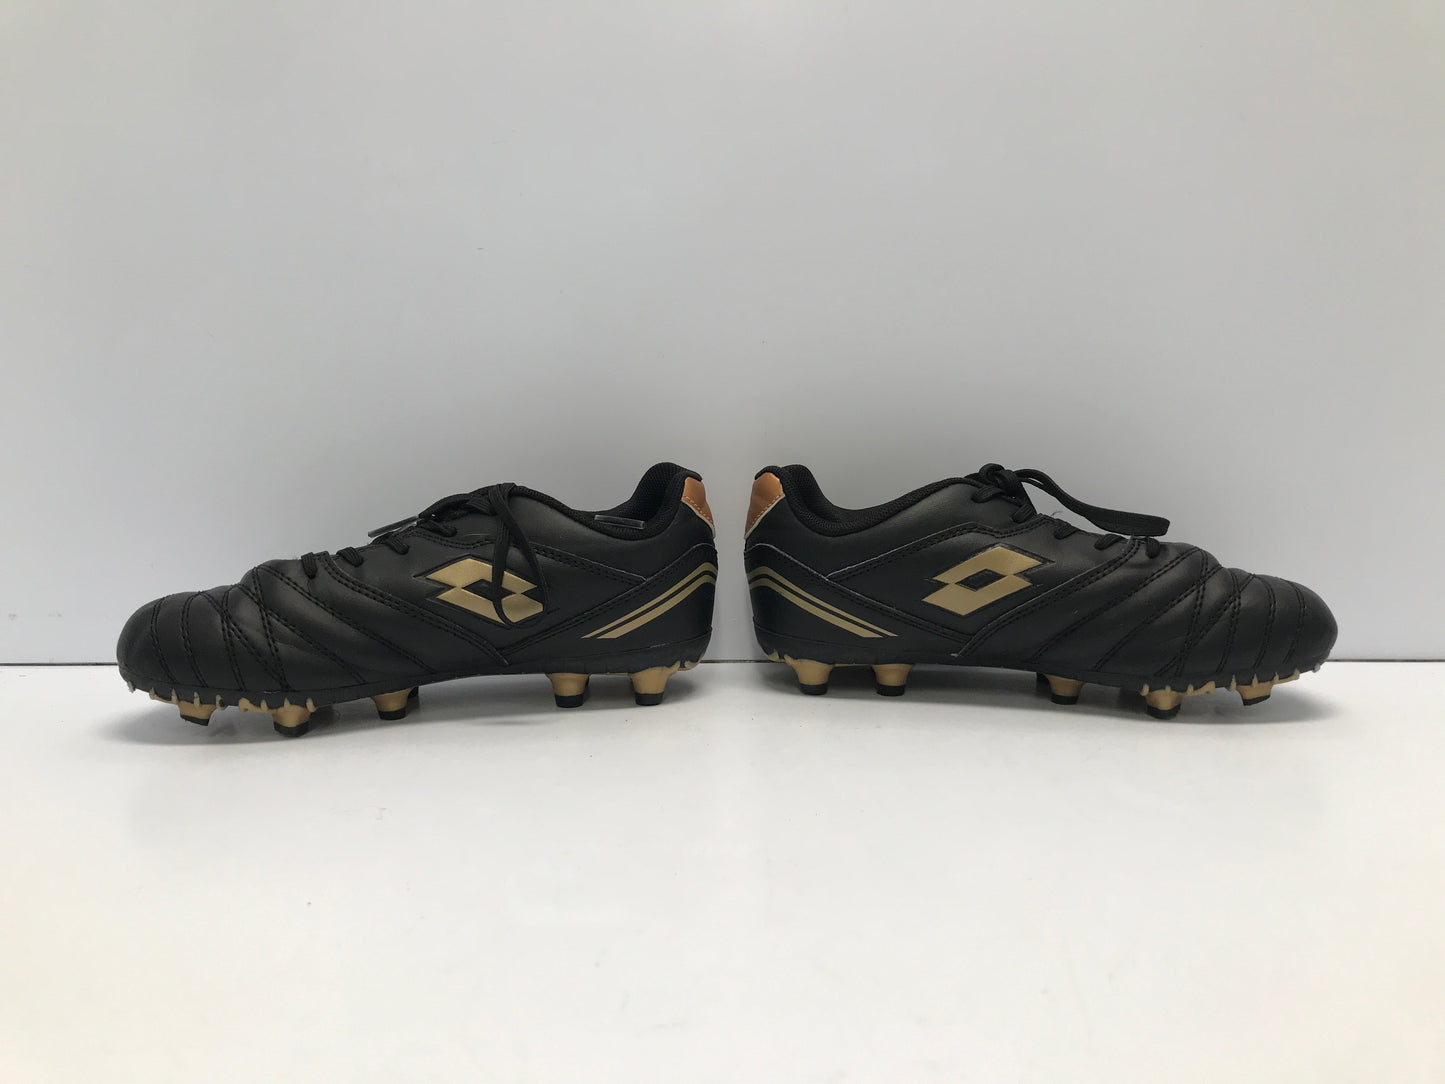 Soccer Shoes Cleats Child Size 2 Lotto Black Bronze Excellent